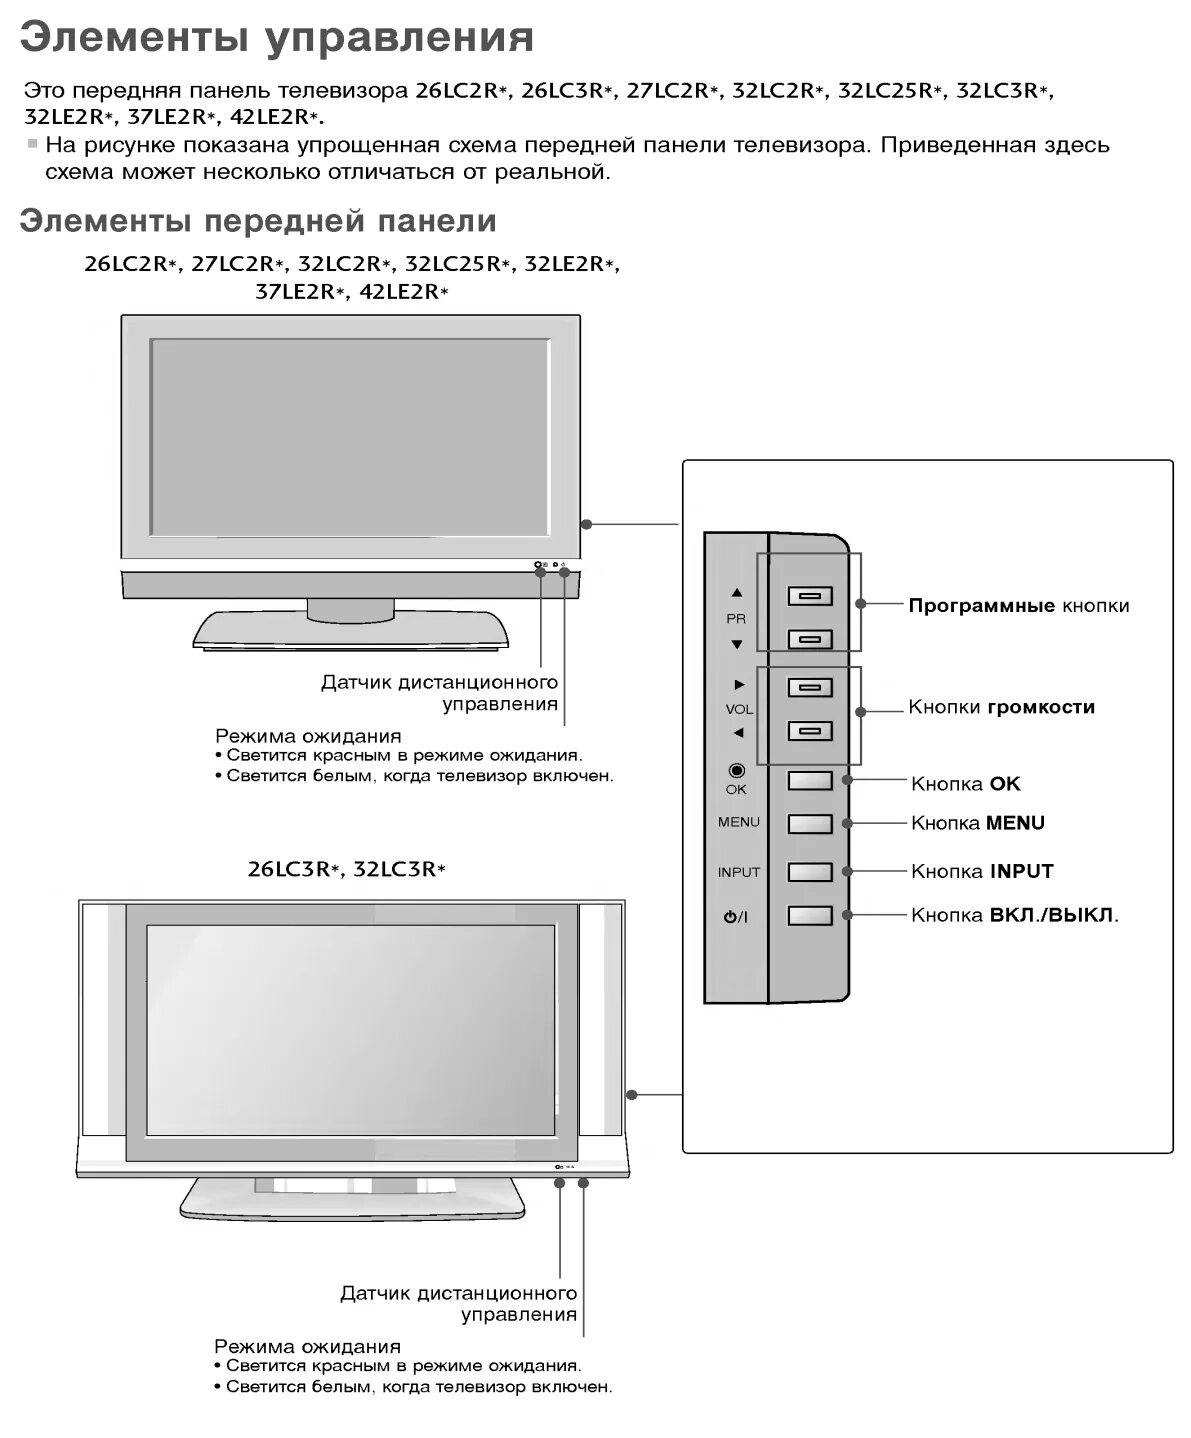 LG 32lc2r схема. Техническое описание и телевизора. Технические характеристики телевизора. Потребительские свойства телевизоров. Описание характеристик телевизоров